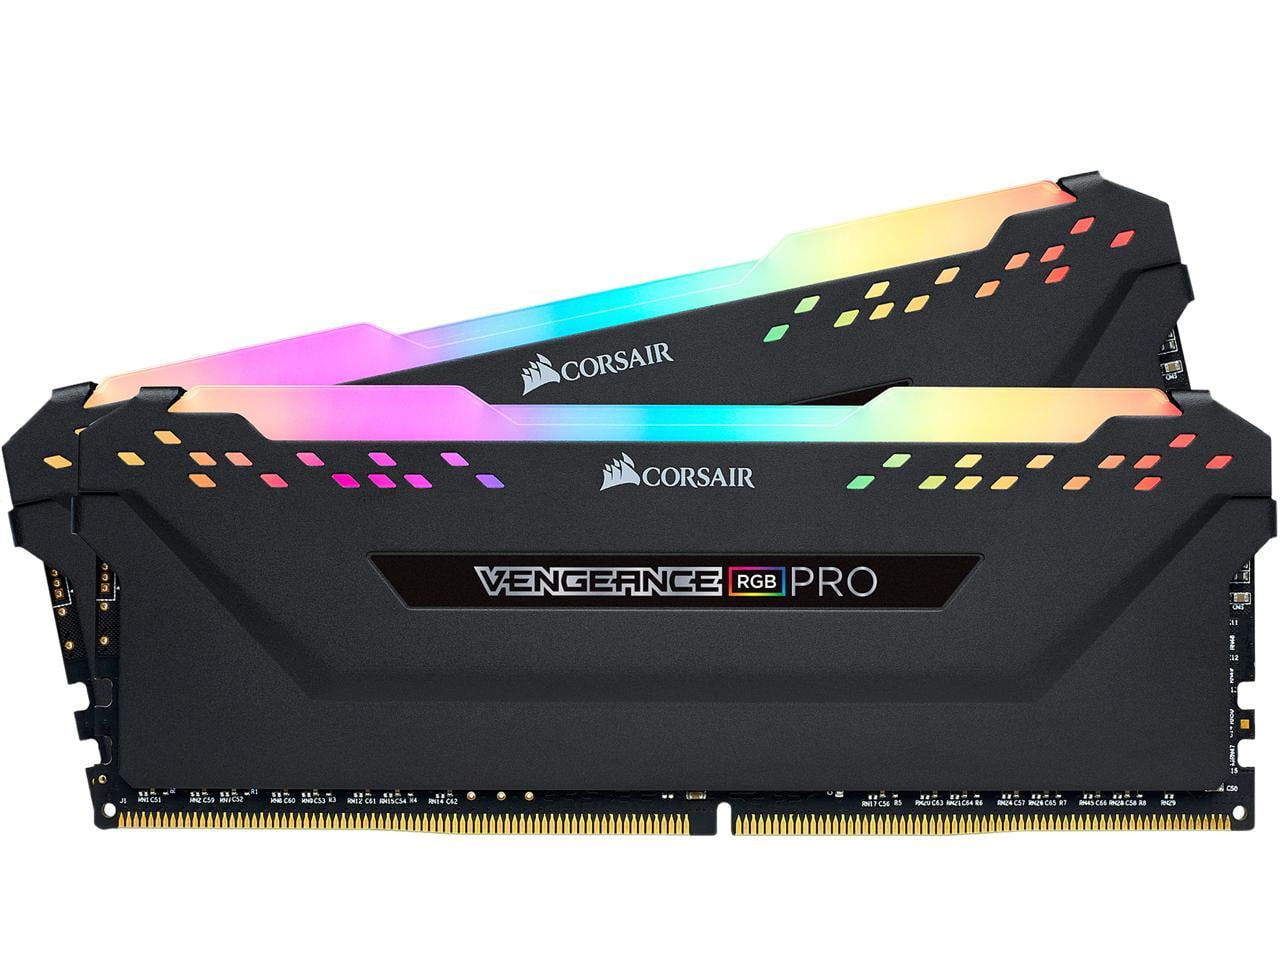 Corsair Vengeance RGB PRO 16GB (2x8GB) DDR4 3200MHz C16 LED Desktop Memory  - Black